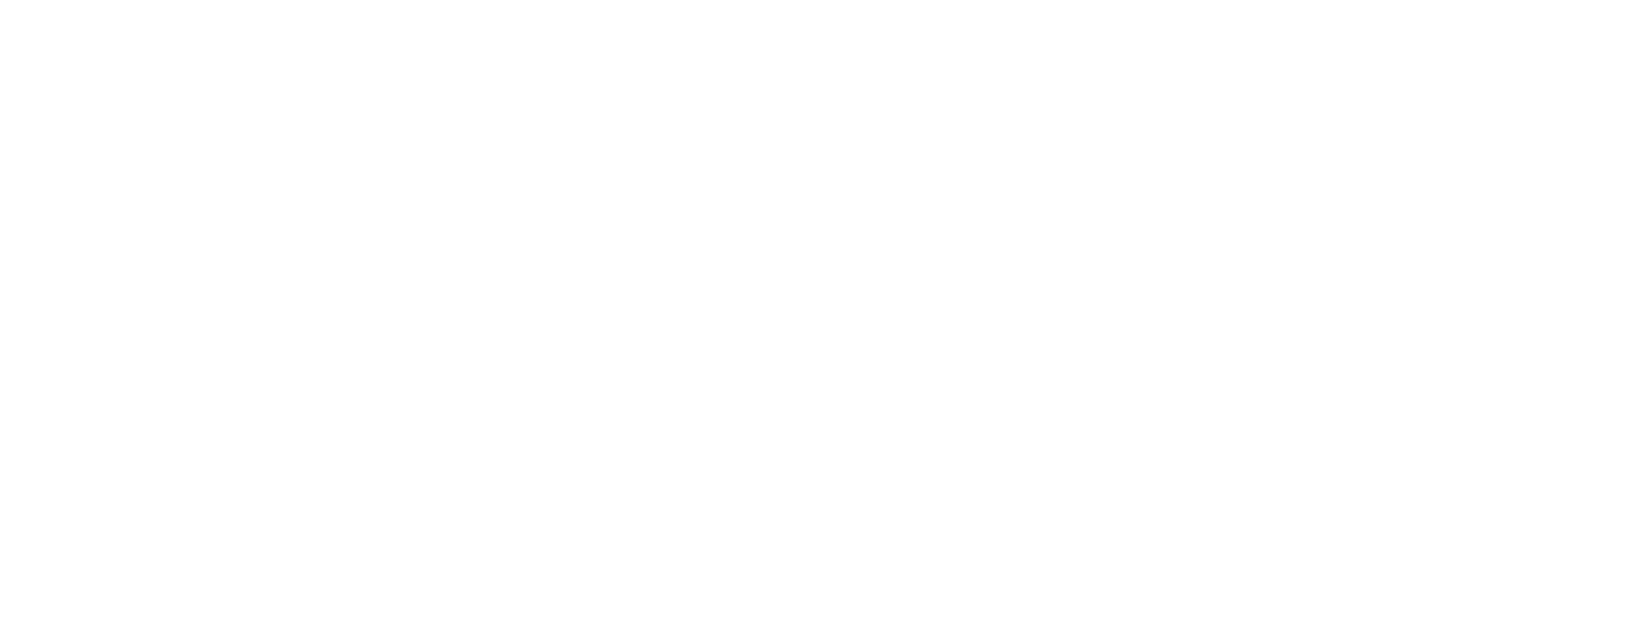 THEWORLD-VILAOLIMPIA-BRANCO